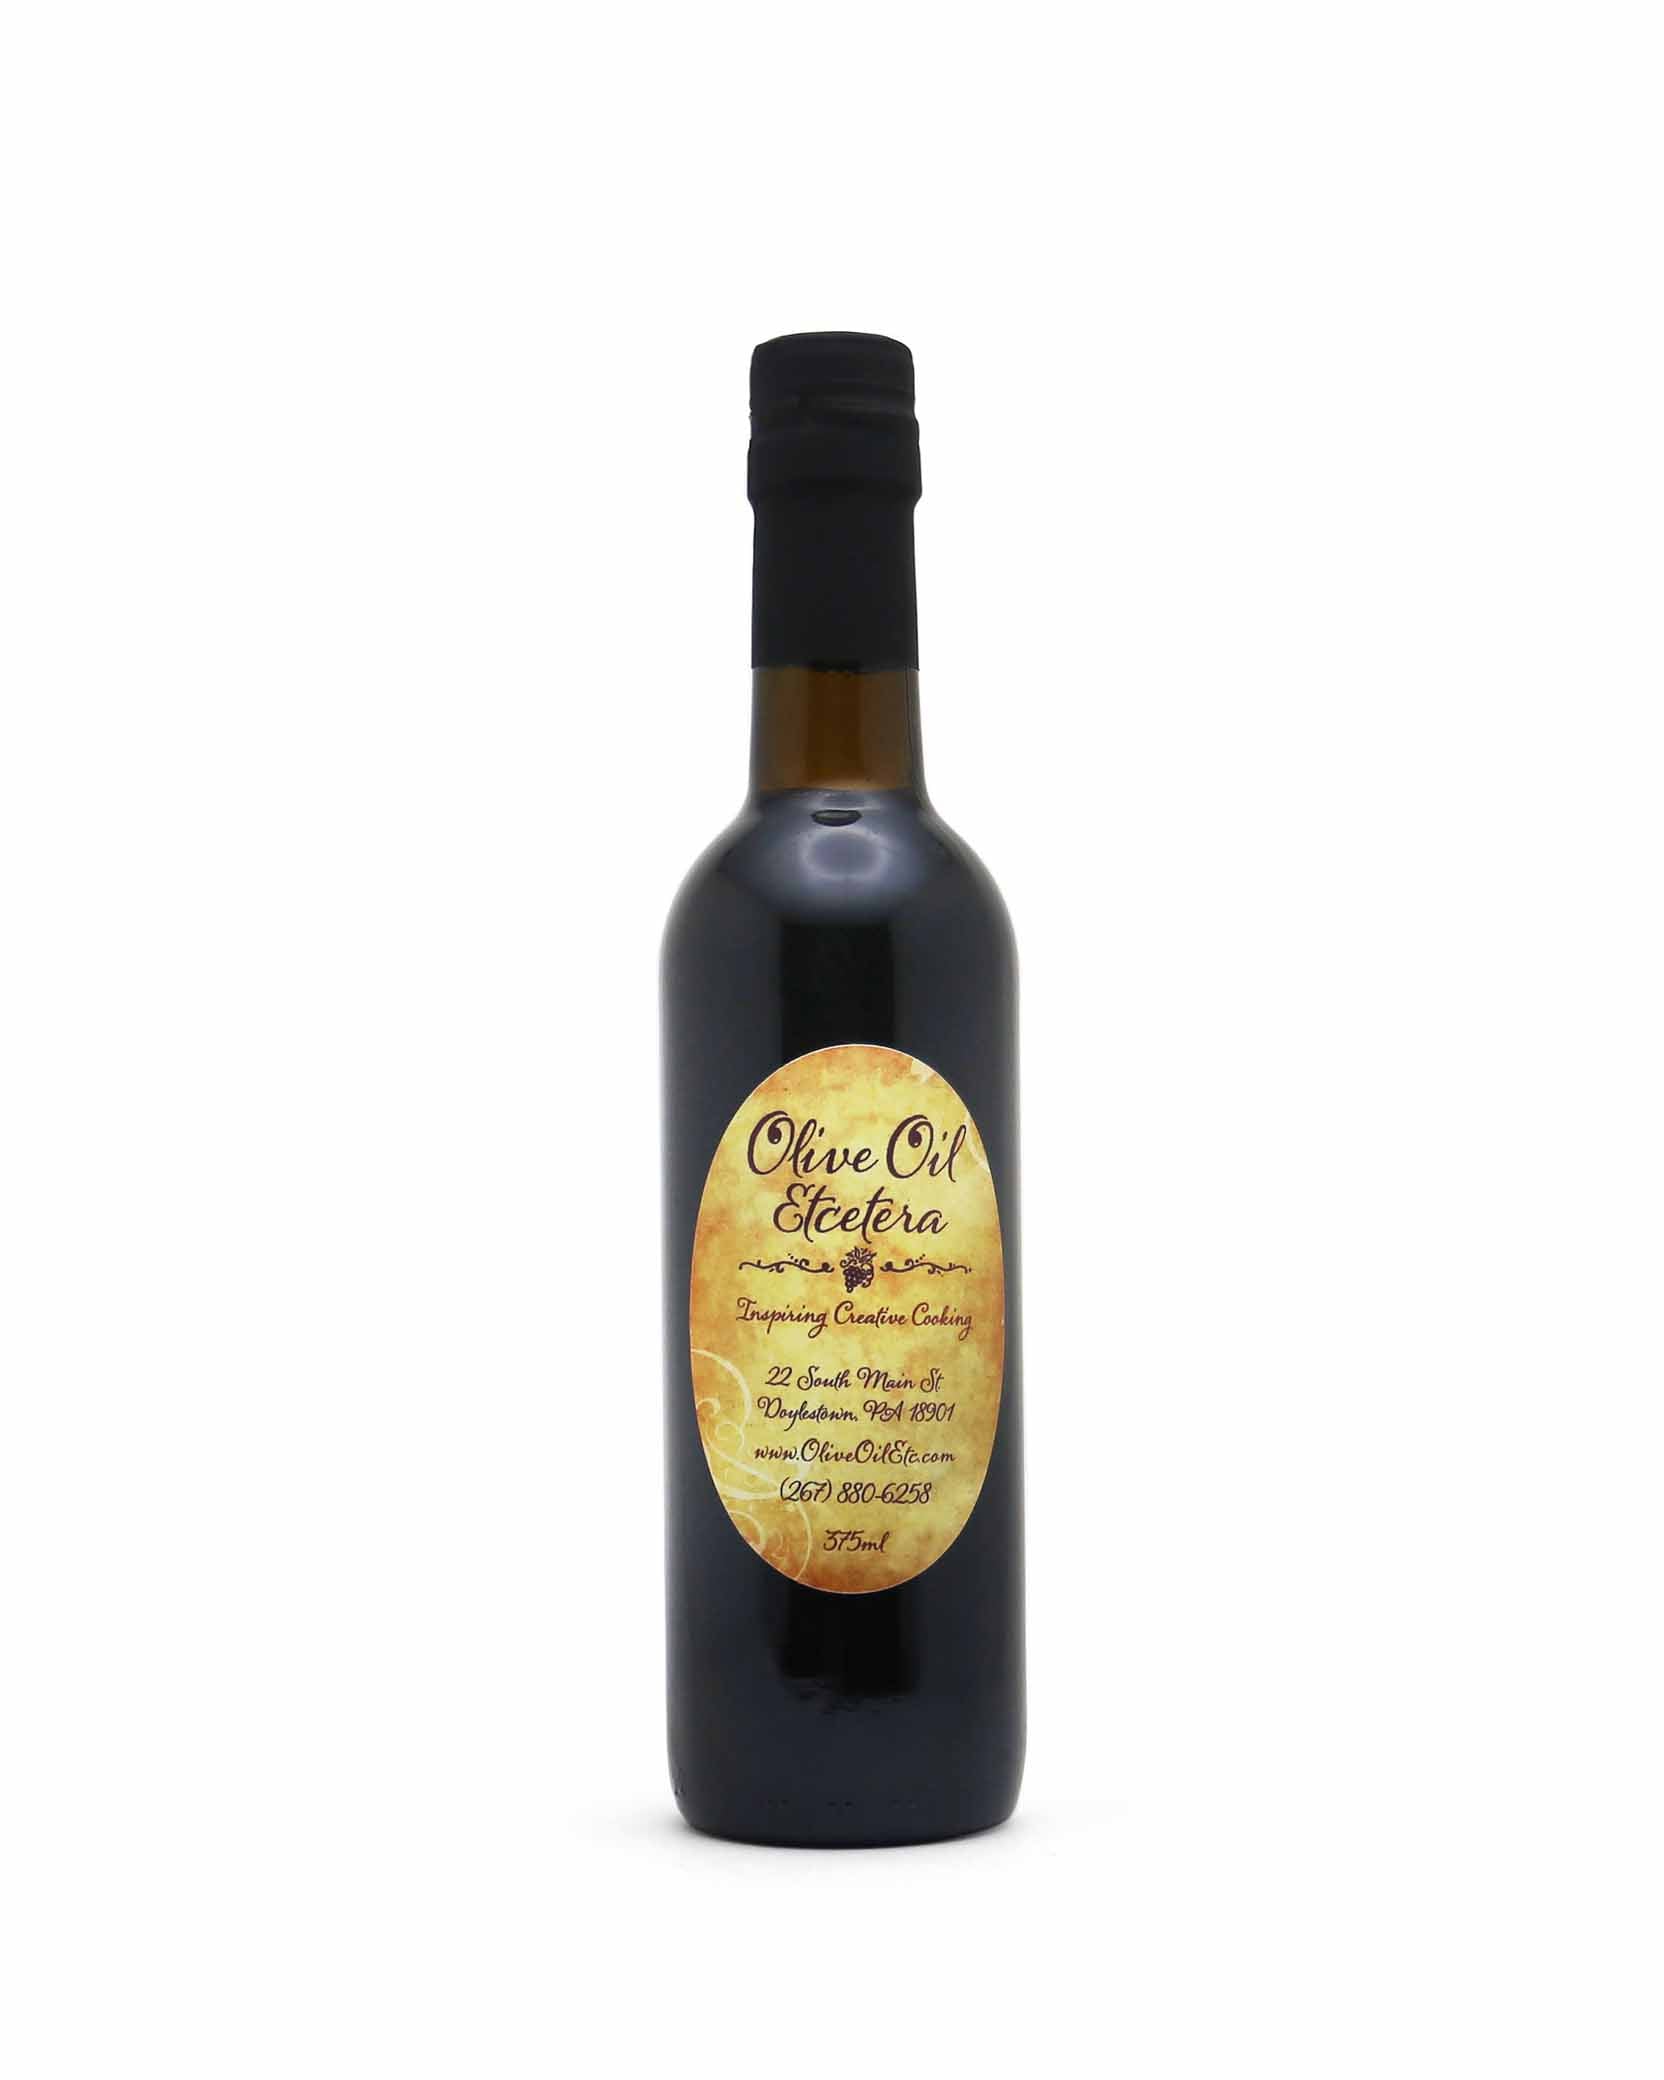 Cranberry Pear White Balsamic Vinegar - Olive Oil Etcetera - Bucks county's gourmet olive oil and vinegar shop